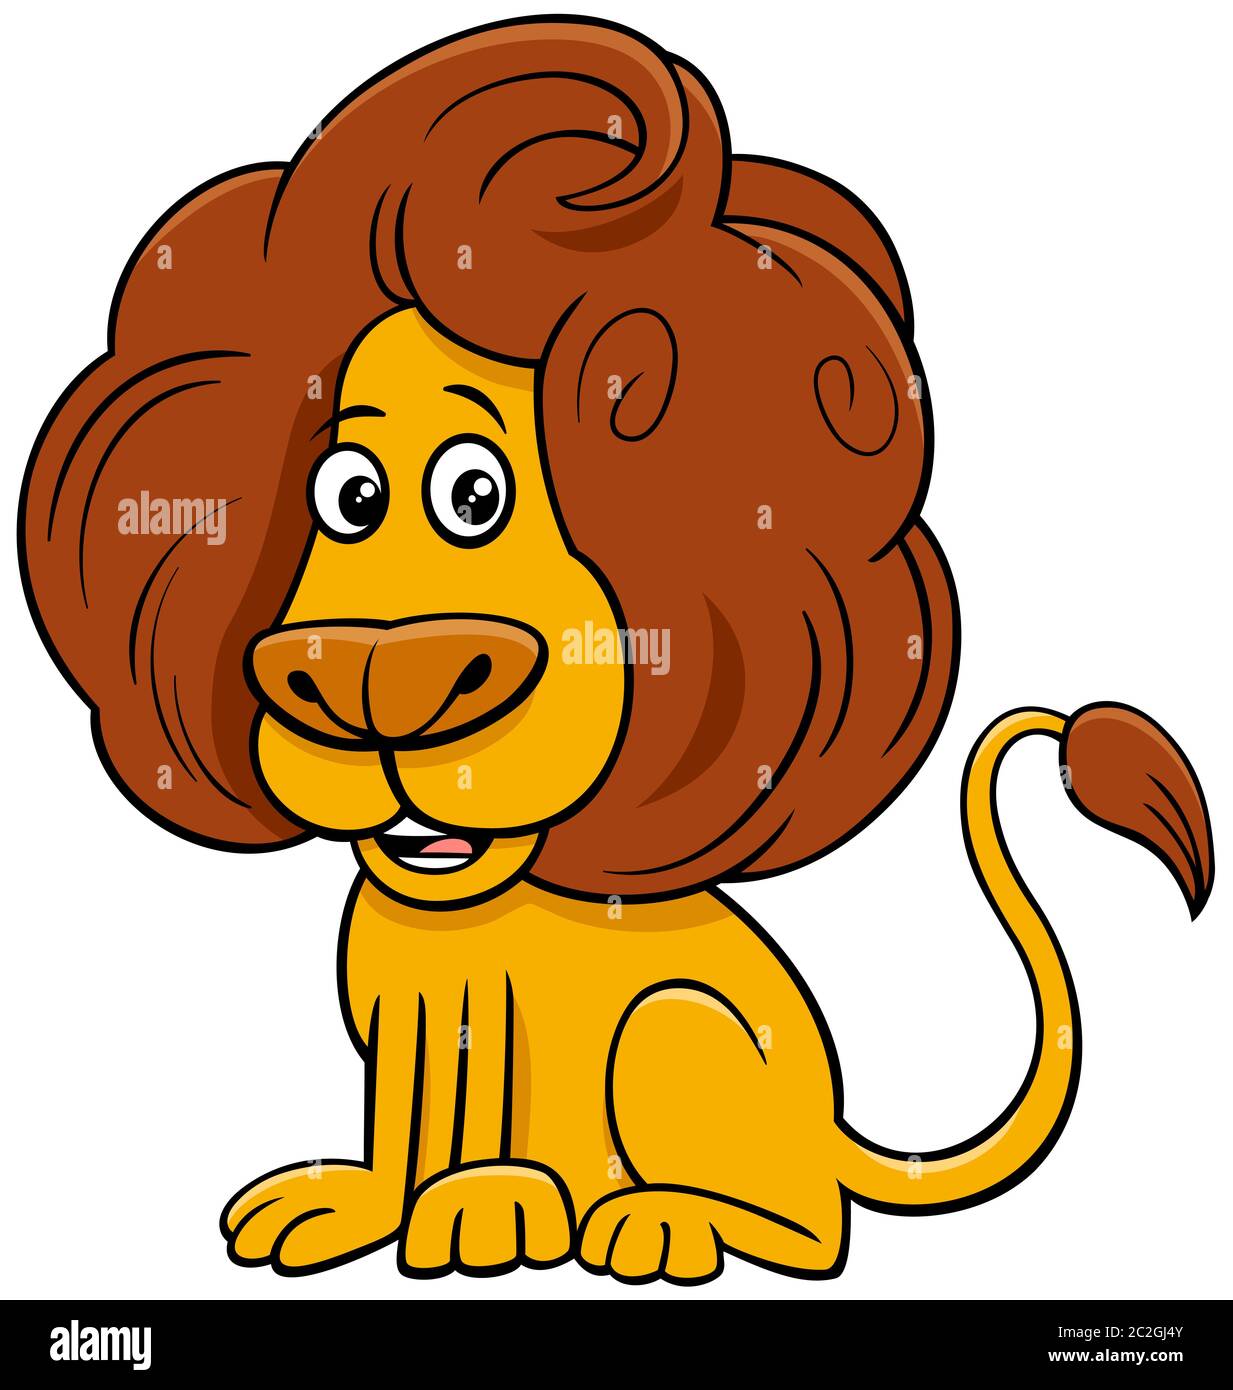 lion comic animal character cartoon illustration Stock Photo - Alamy